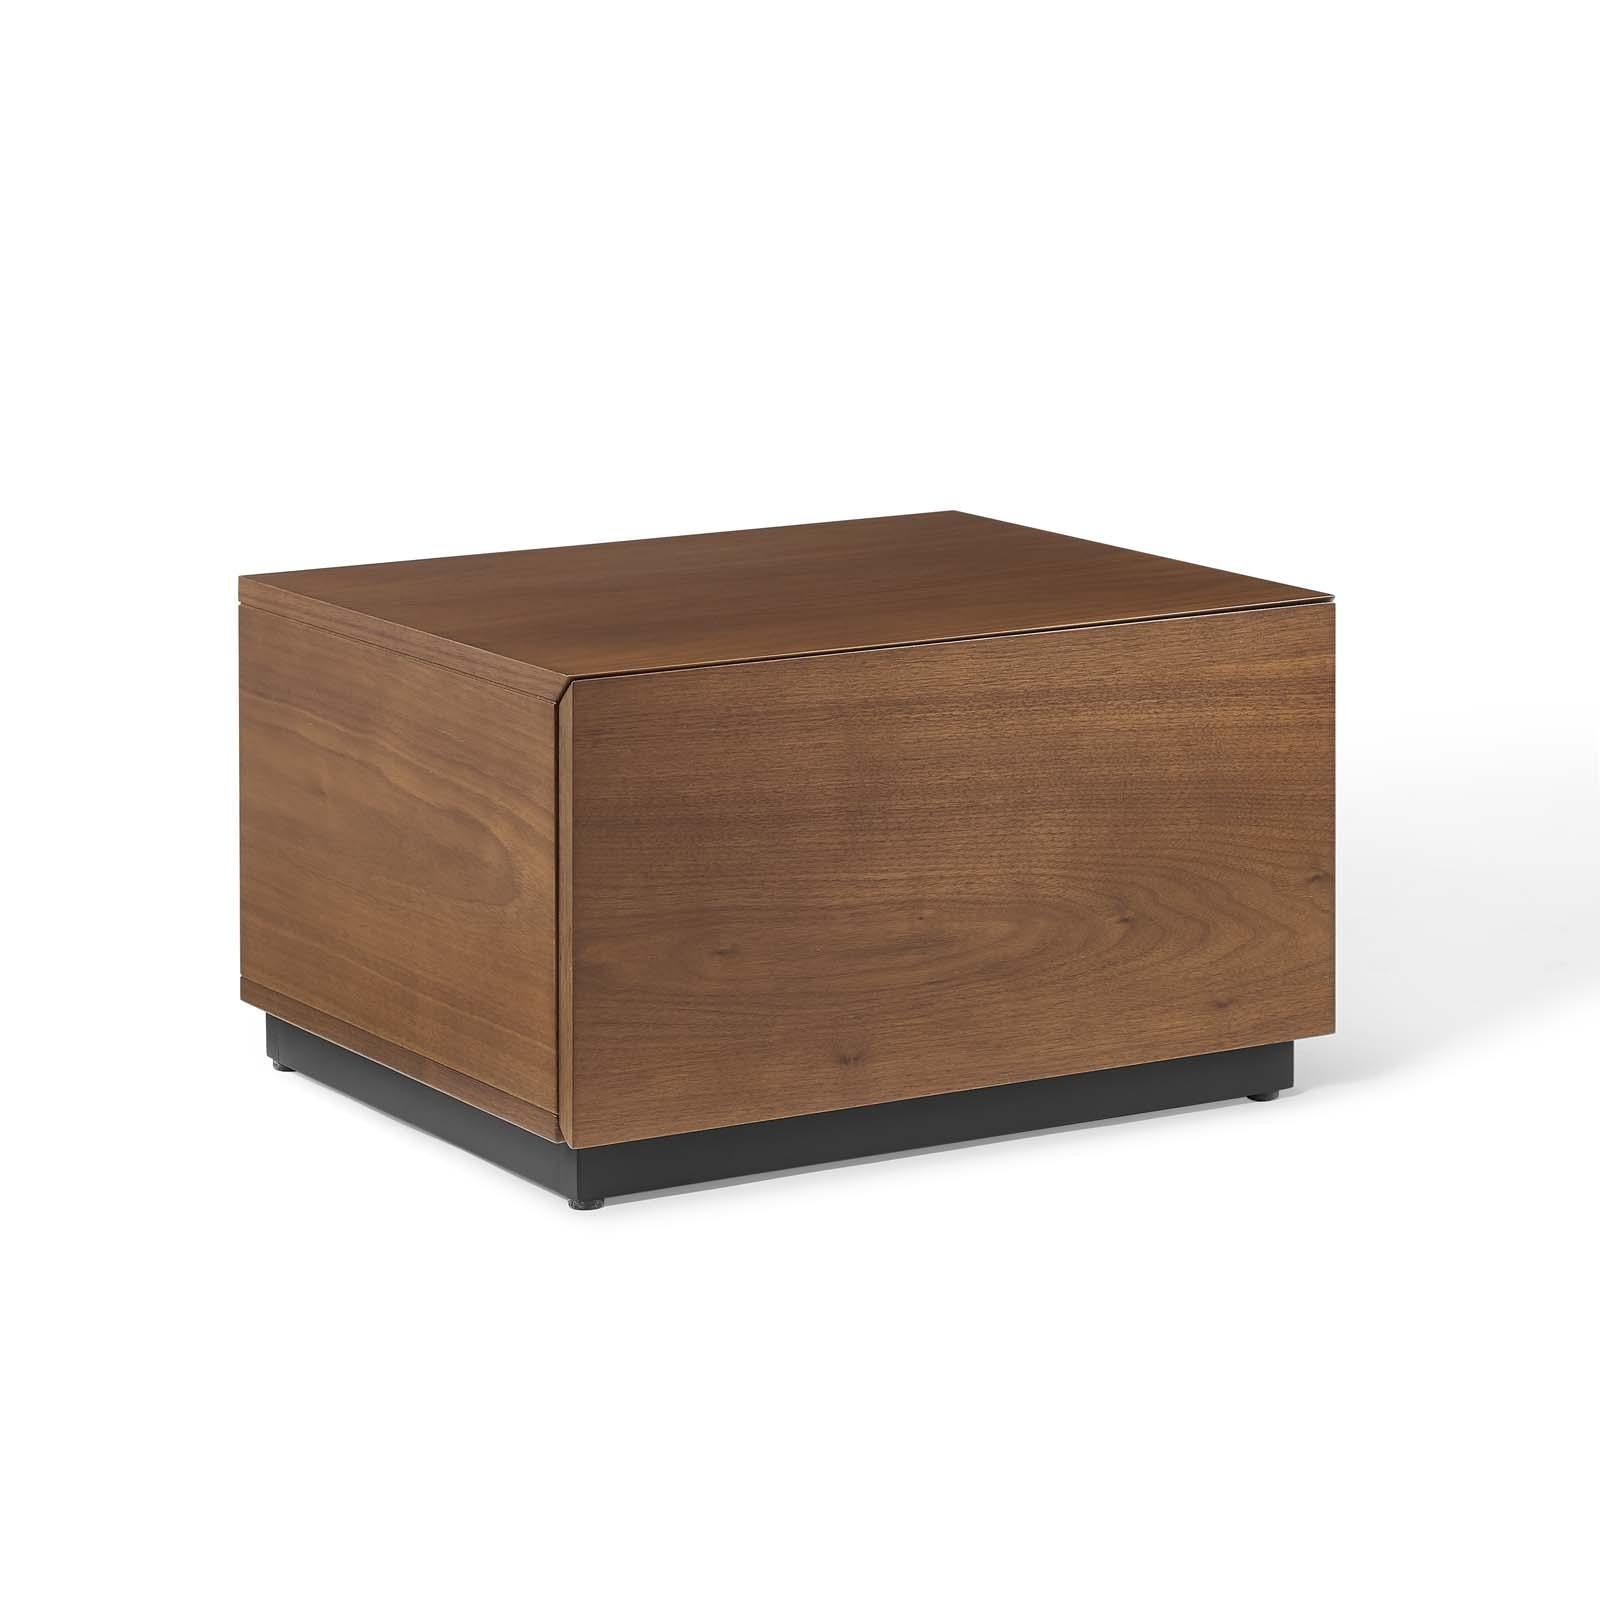 Modway Furniture Modern Caima 5-Piece Bedroom Set - MOD-6295